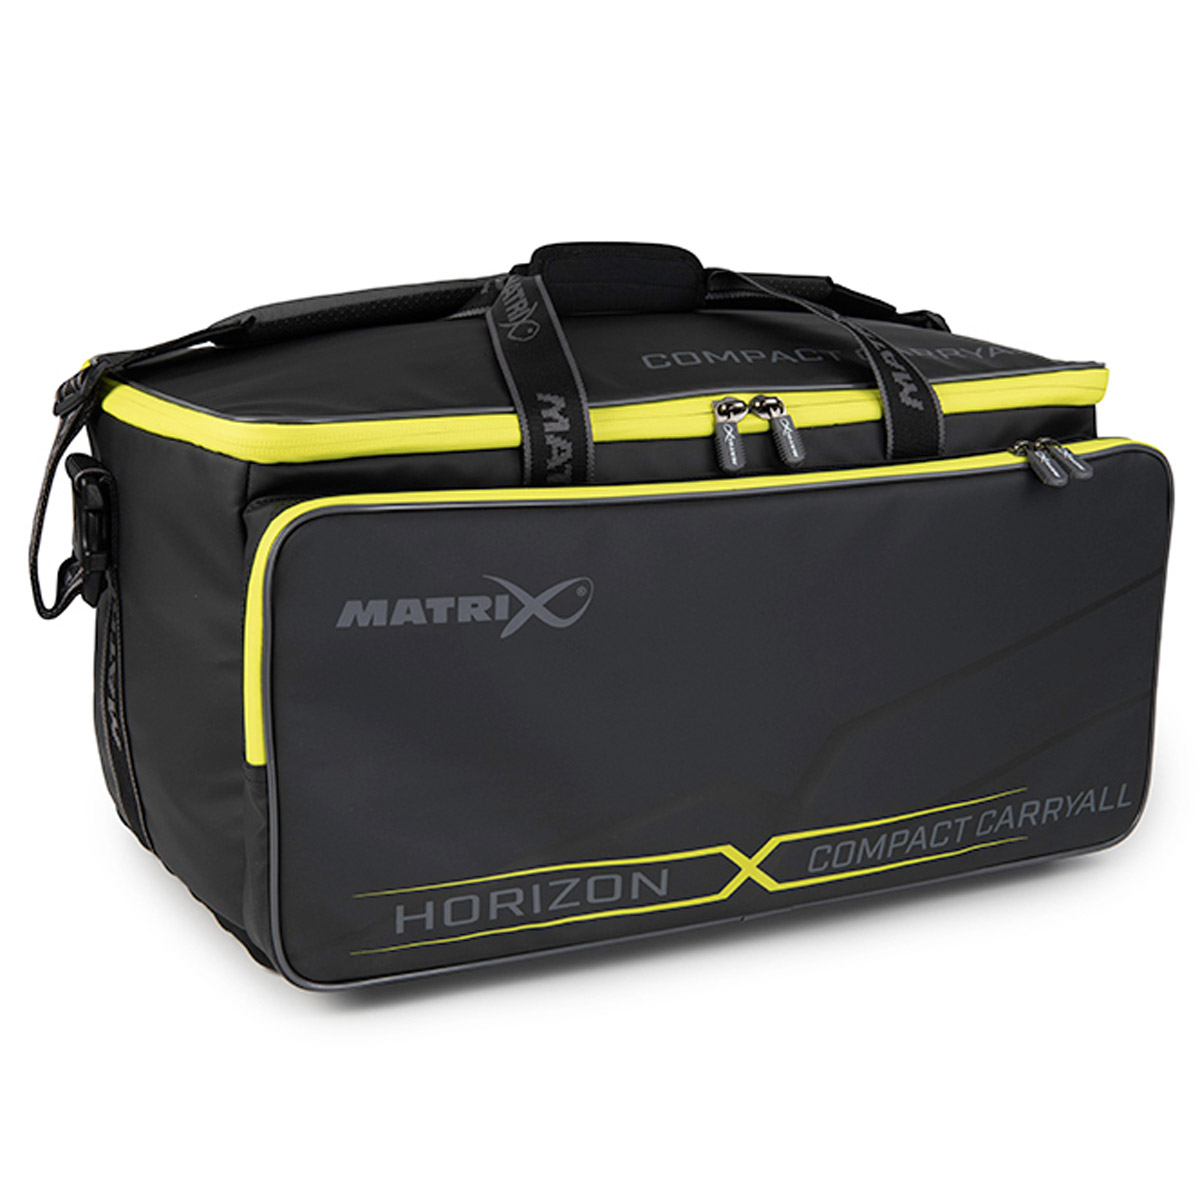 Fox Matrix Horizon X Compact Carryall